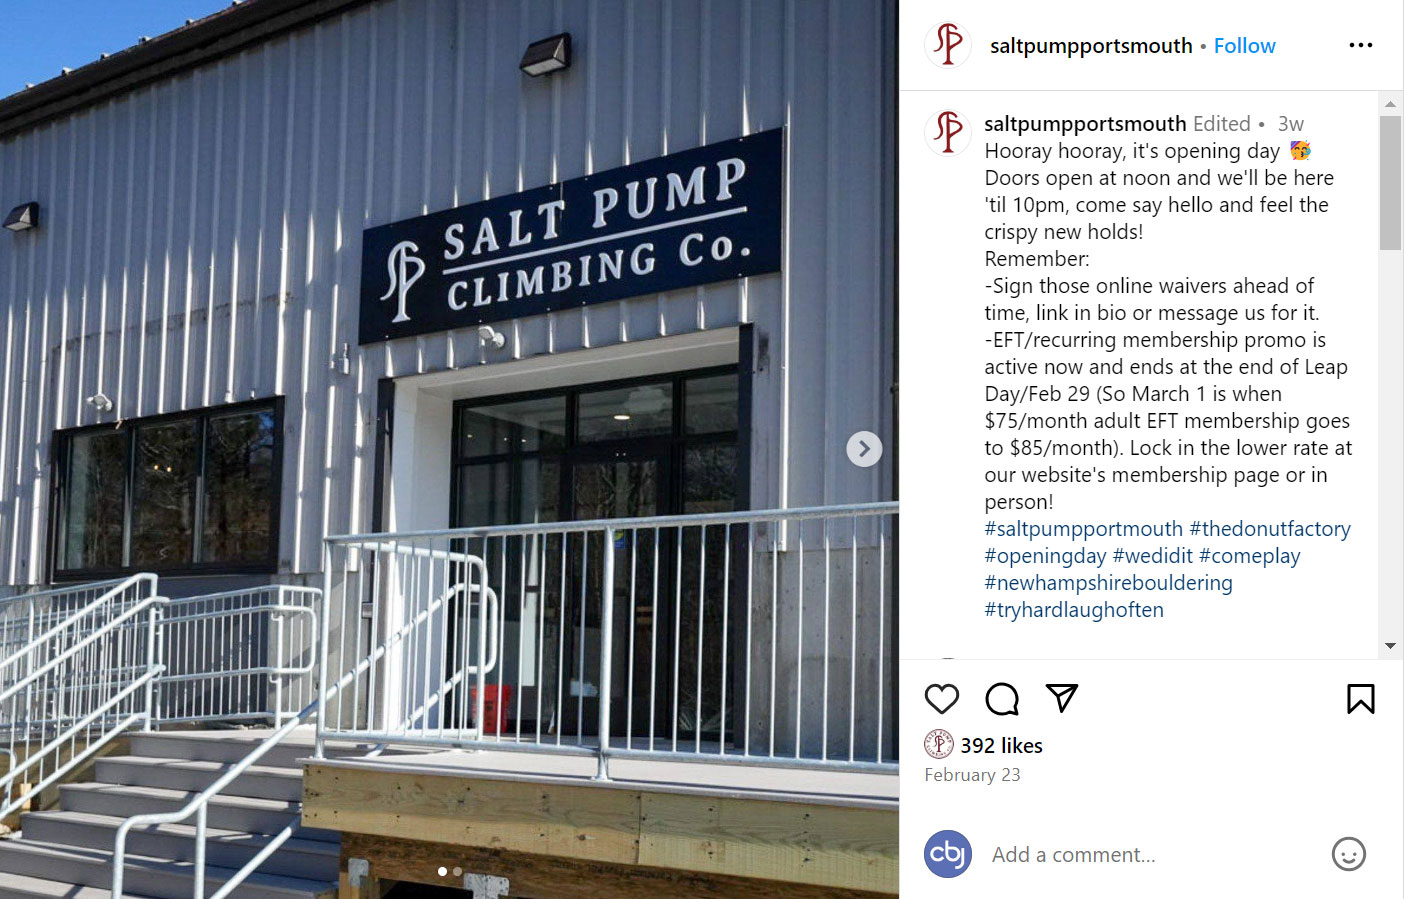 Salt Pump Portsmouth's grand opening post